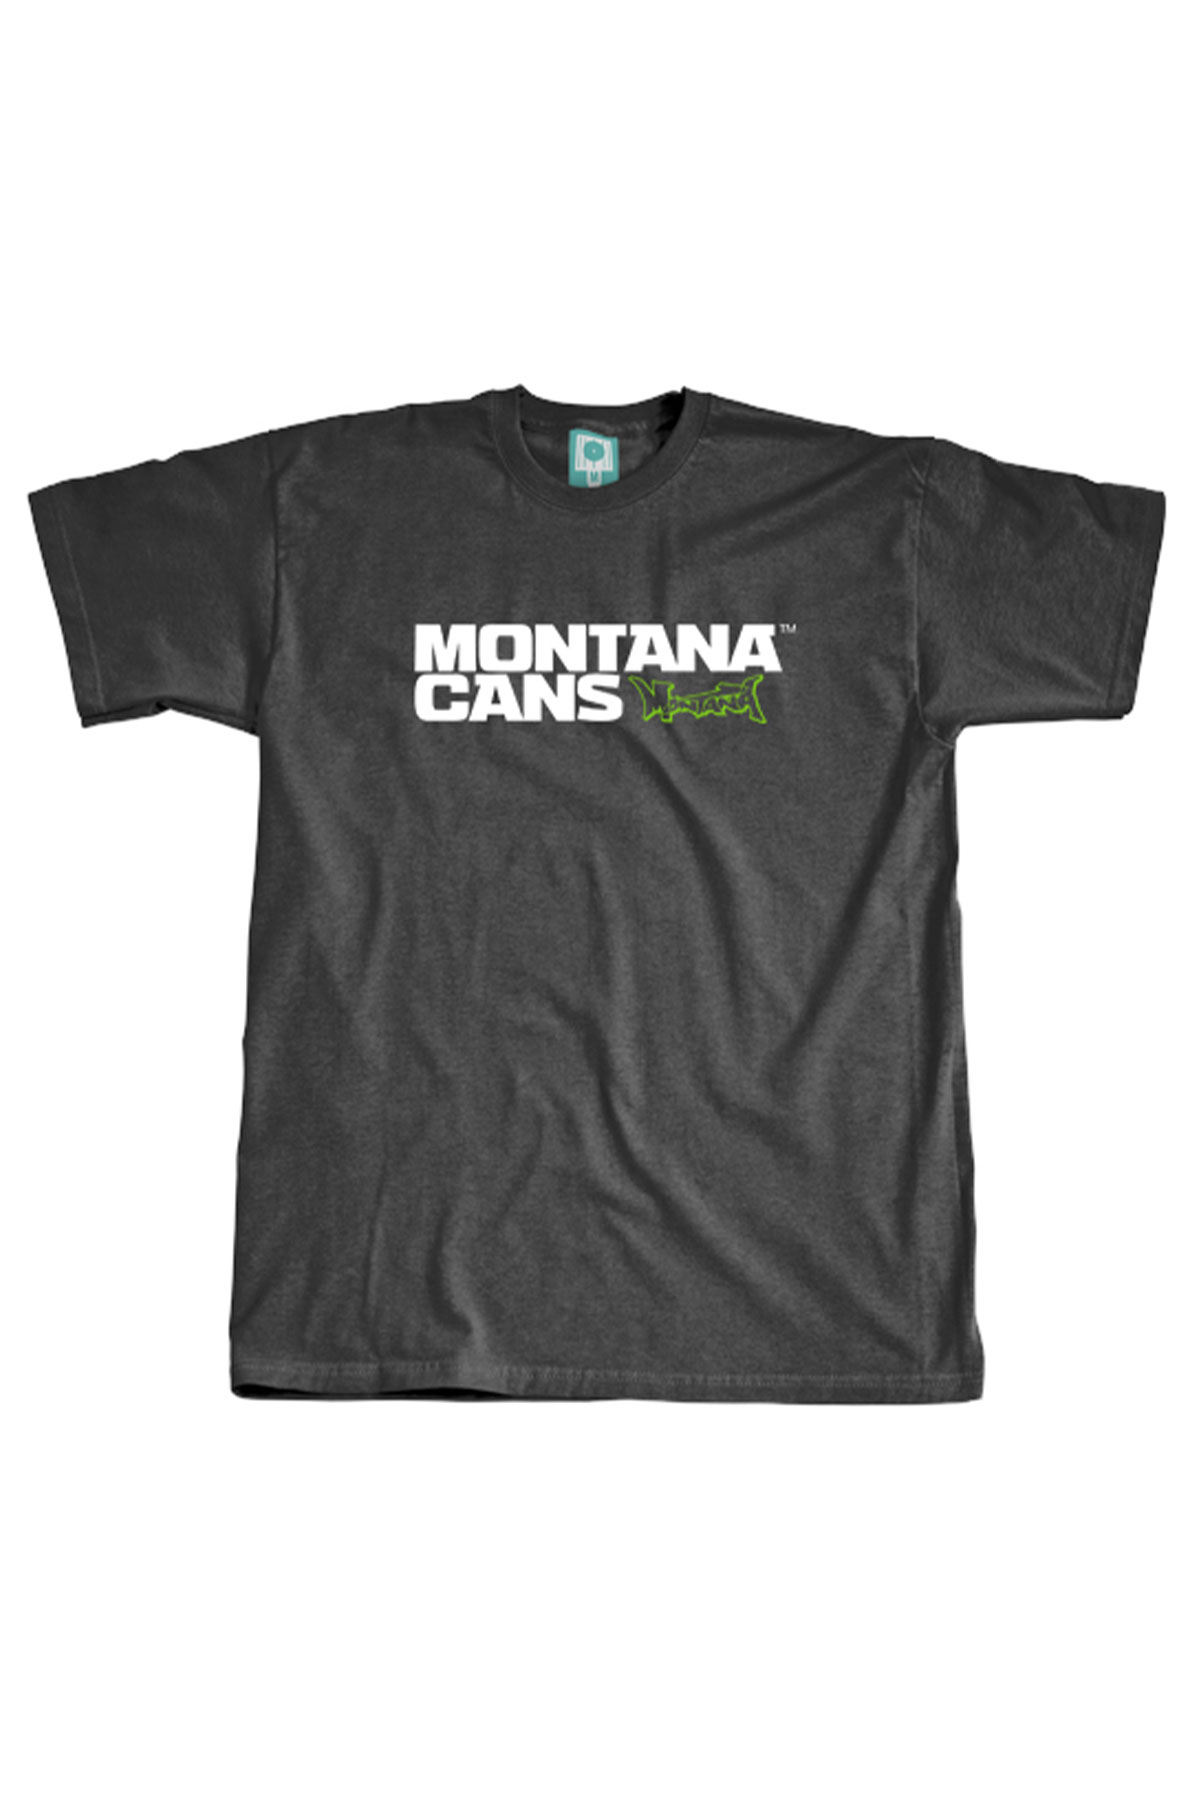 Montana TYPO+LOGO Charcoal T-Shirt